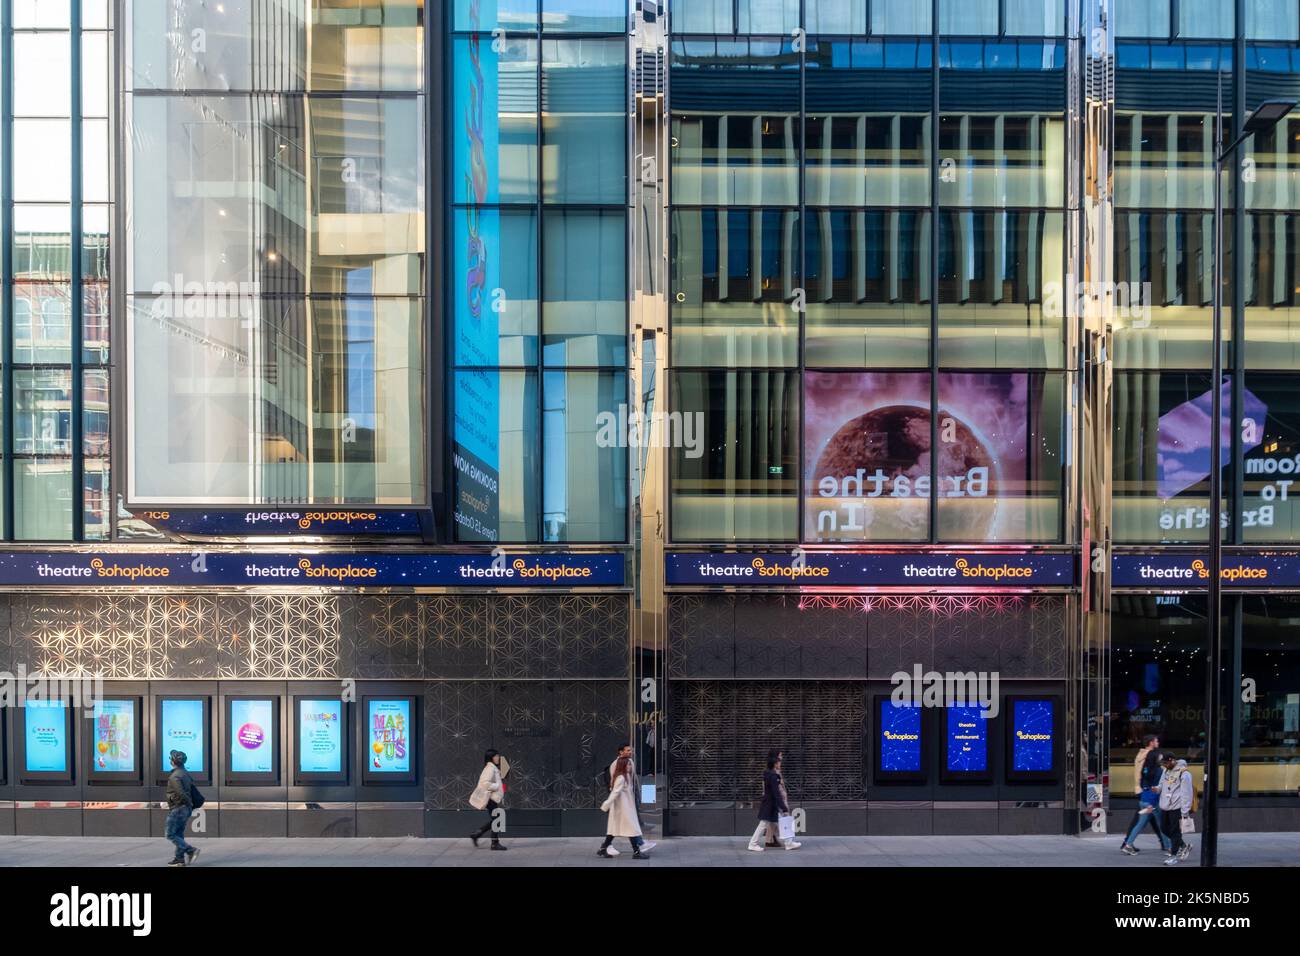 Soho Place Theatre, London, UK Stock Photo